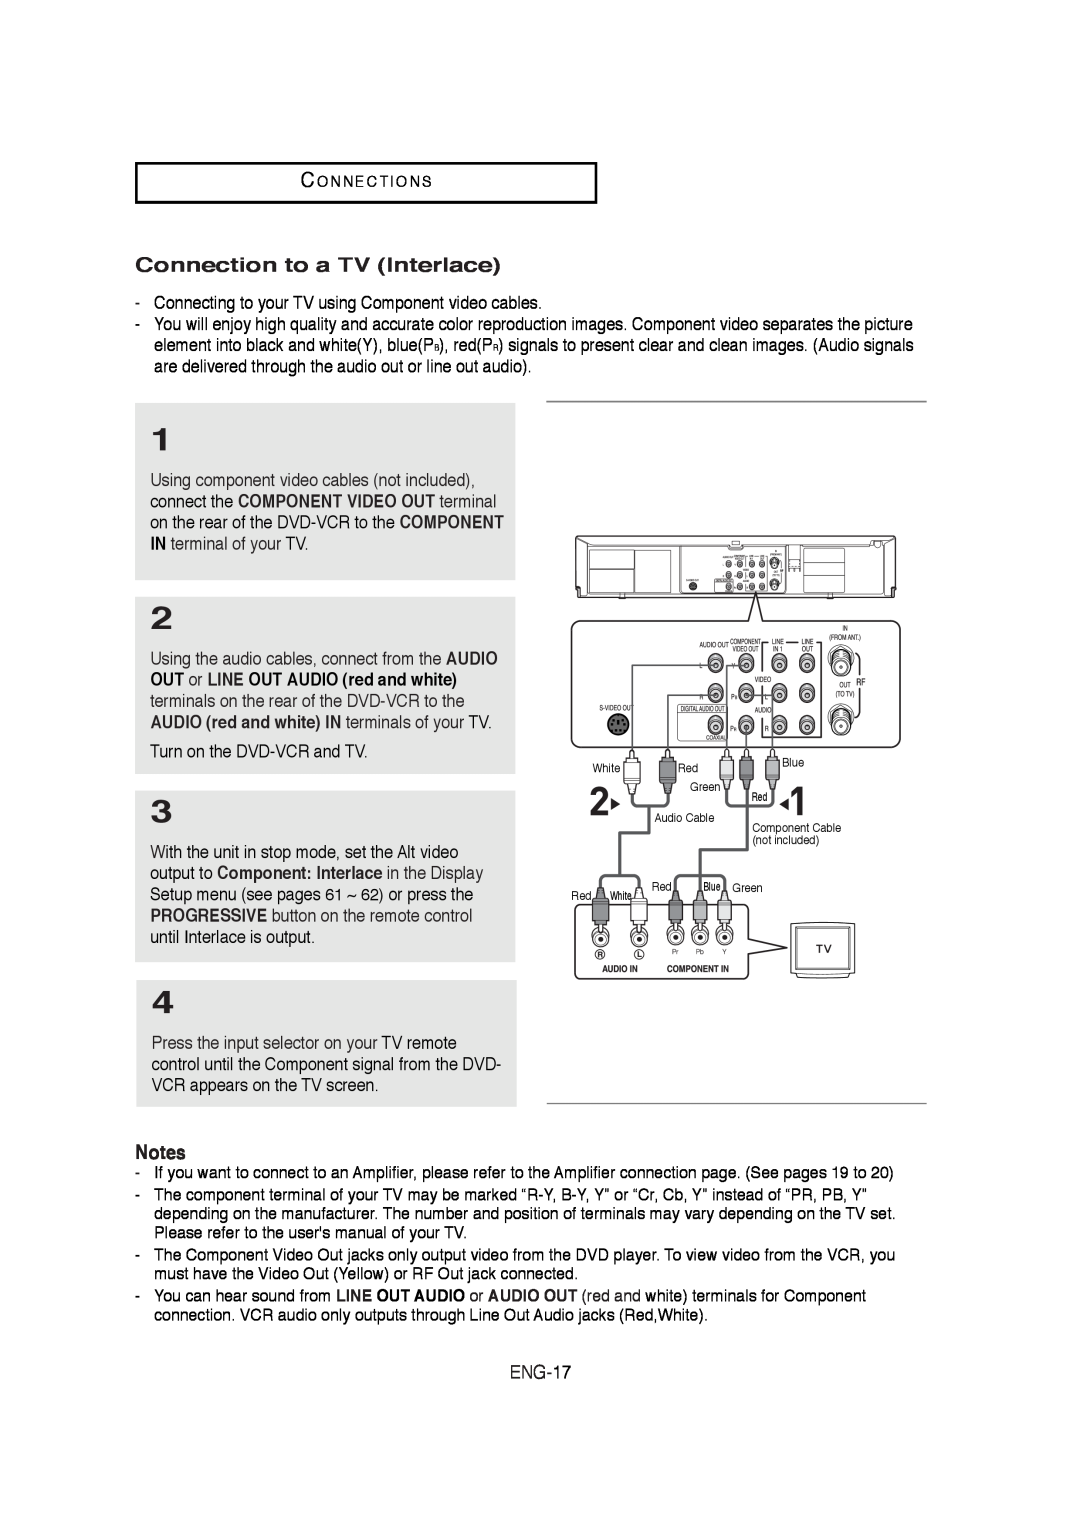 Samsung AK68-01304A, V6700-XAC, 20070205090323359 instruction manual Connection to a TV Interlace, ENG-17 